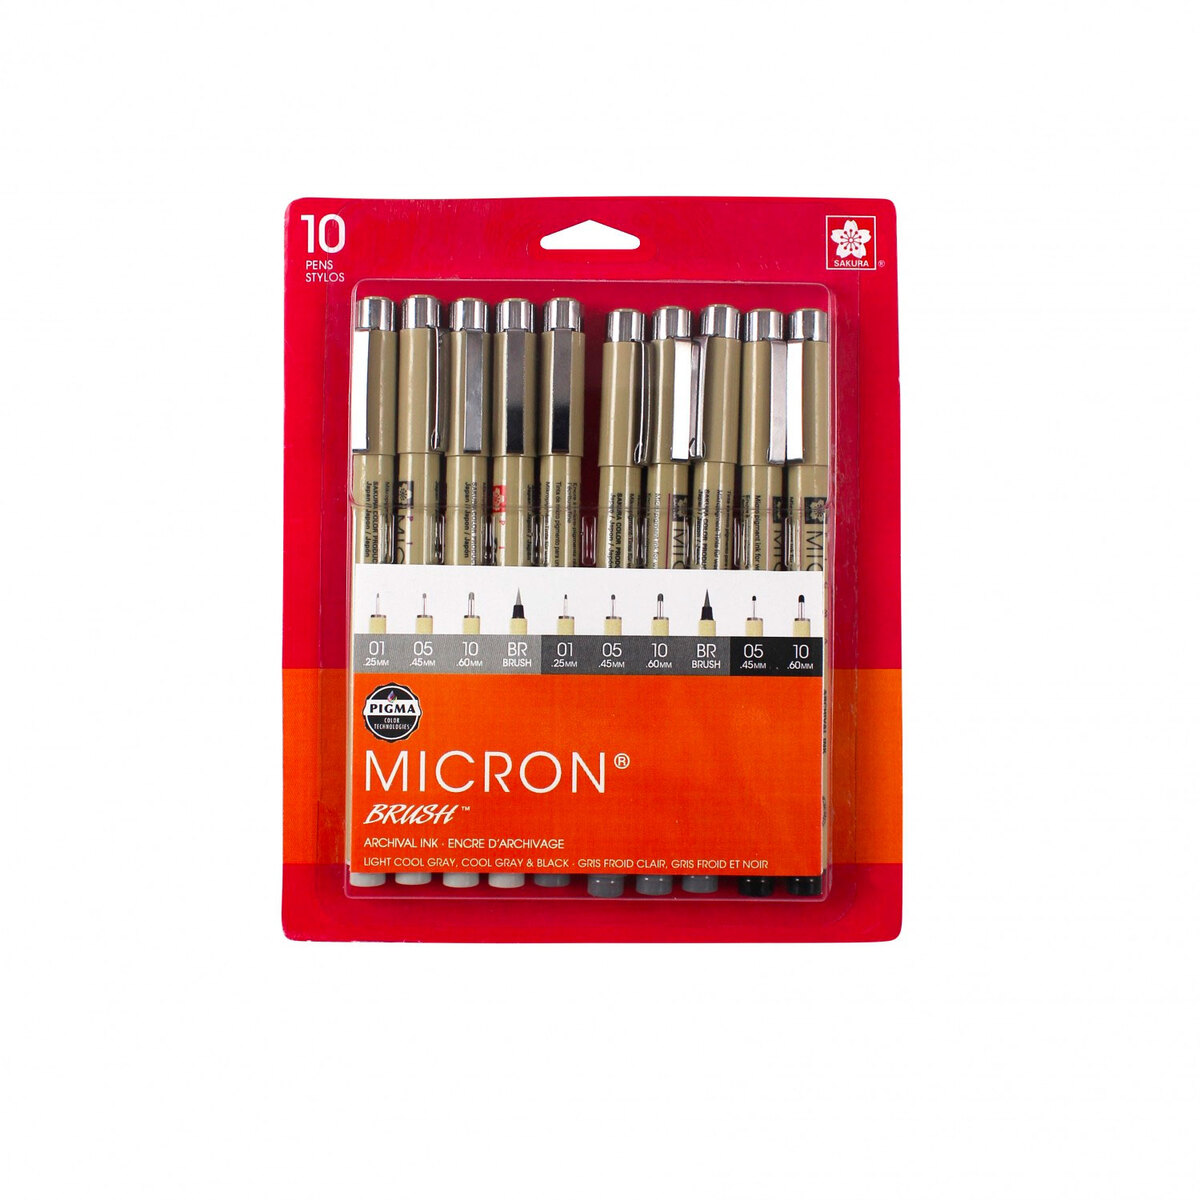 Sakura Pigma Micron Pens & Sets